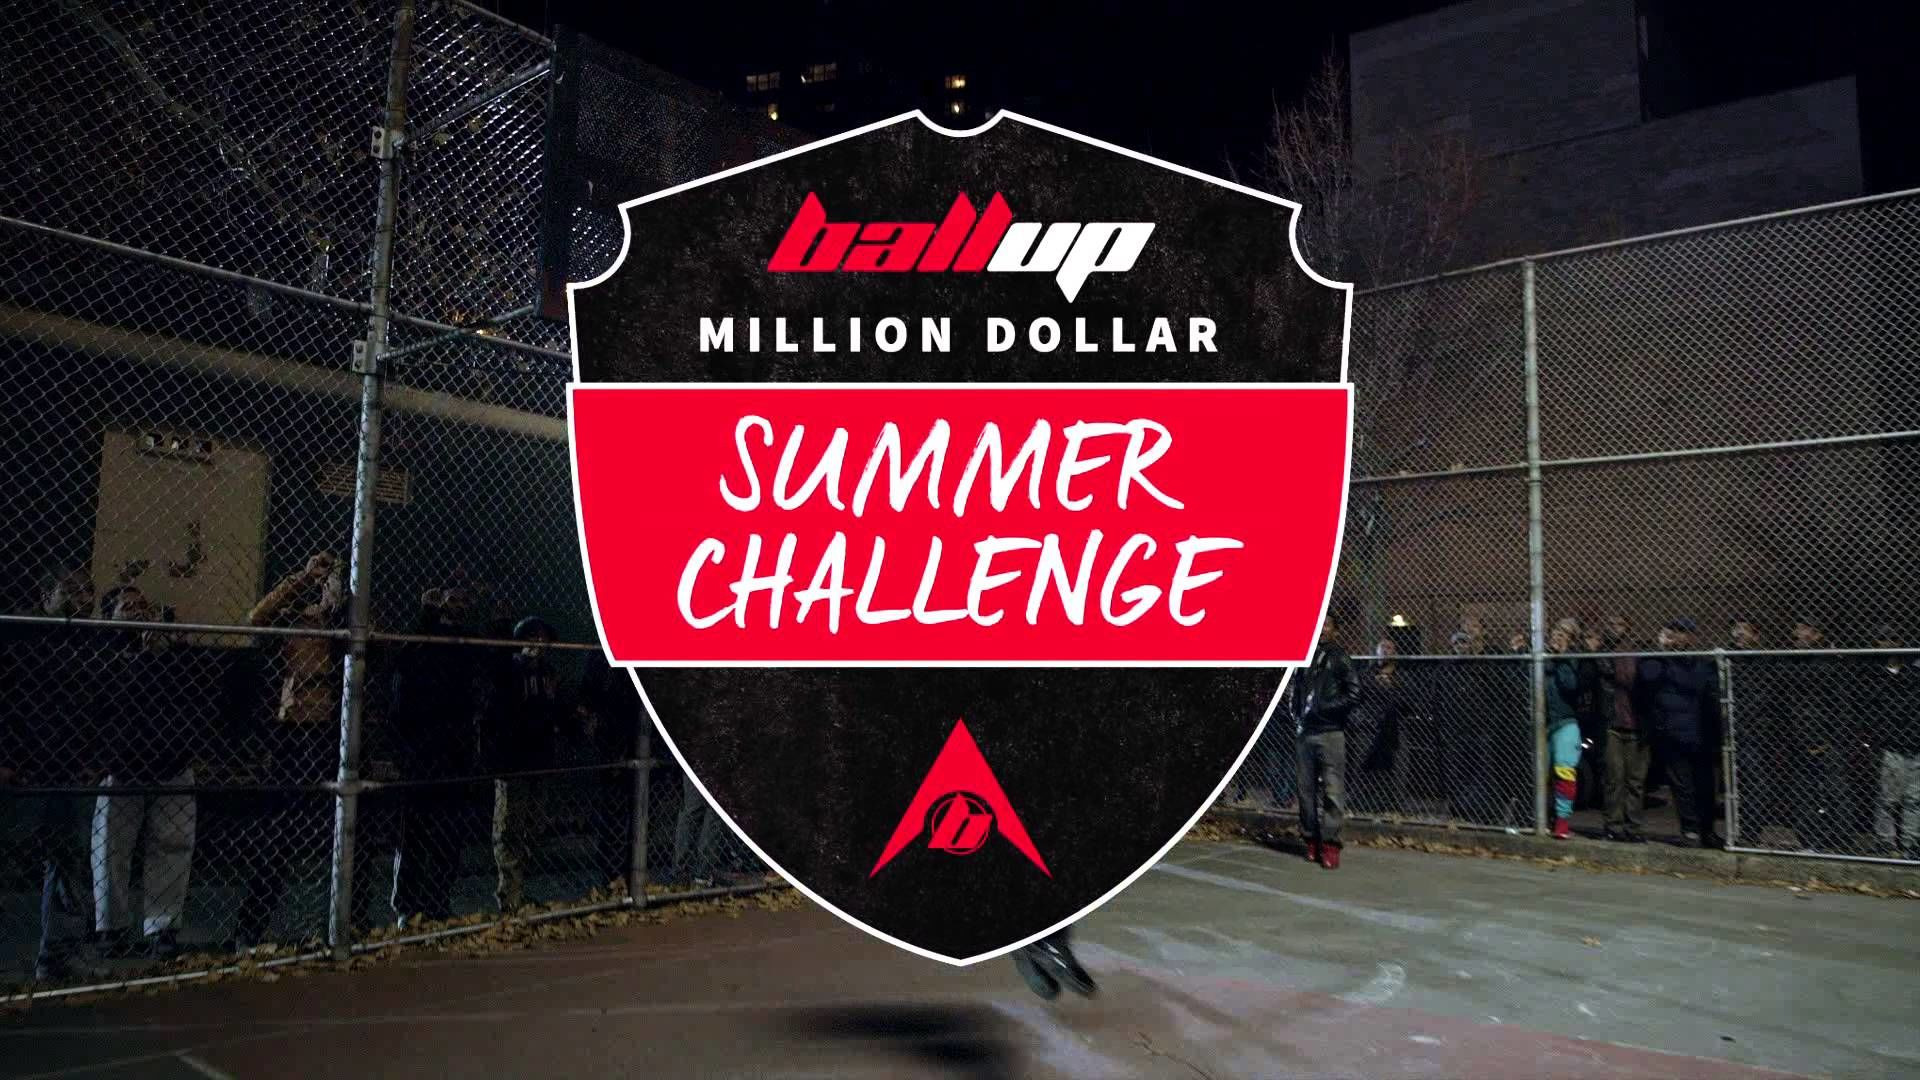 Сериал Ball Up Million Dollar Summer Challenge